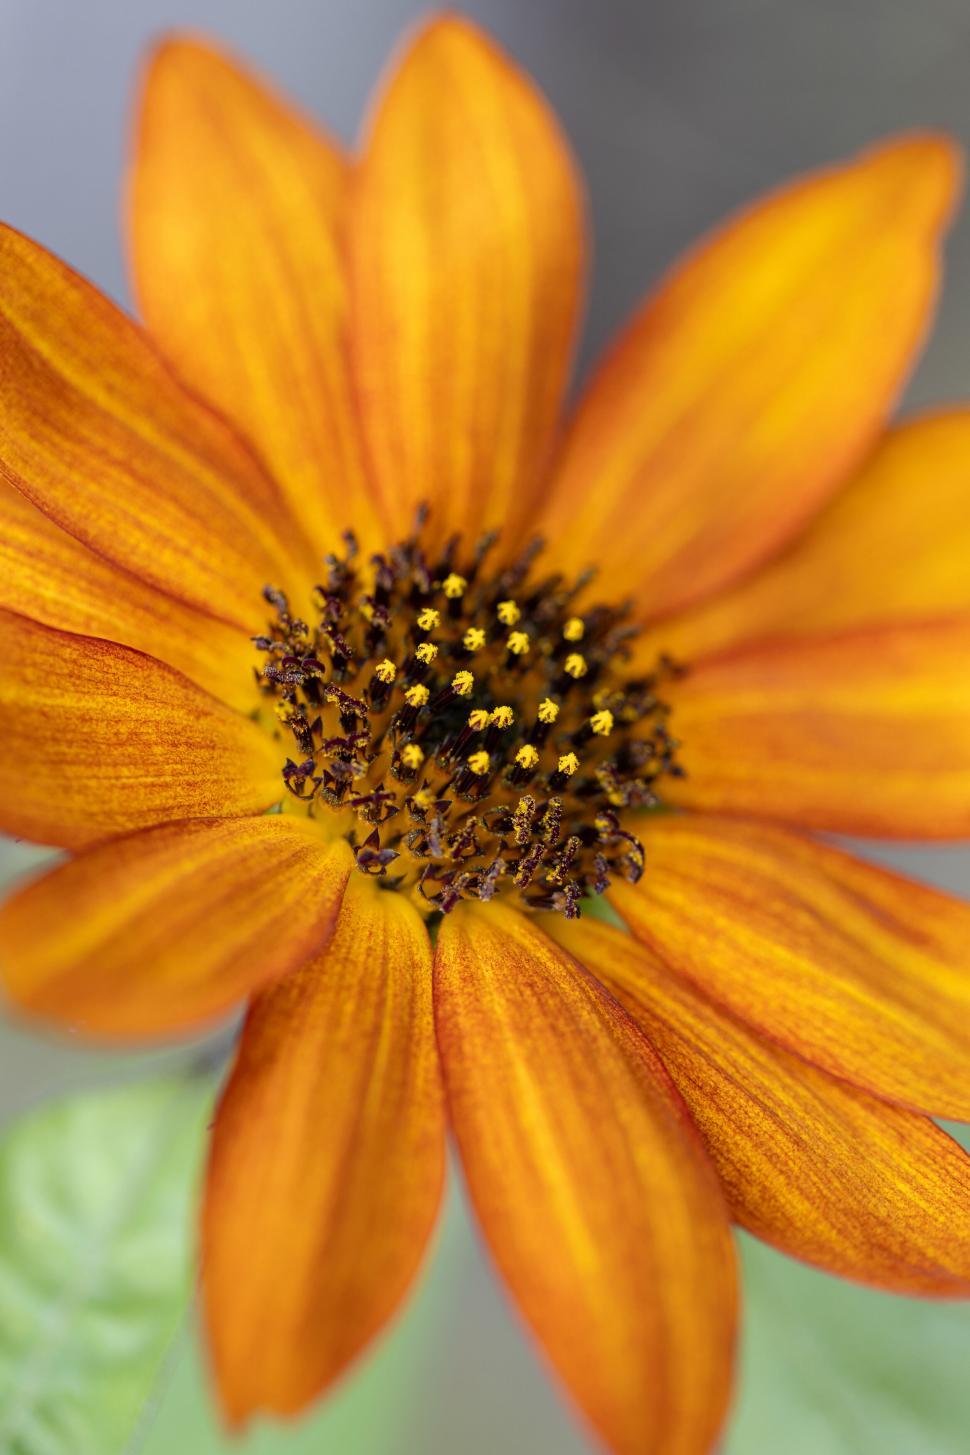 Free Image of Sunlit orange flower with detailed center 